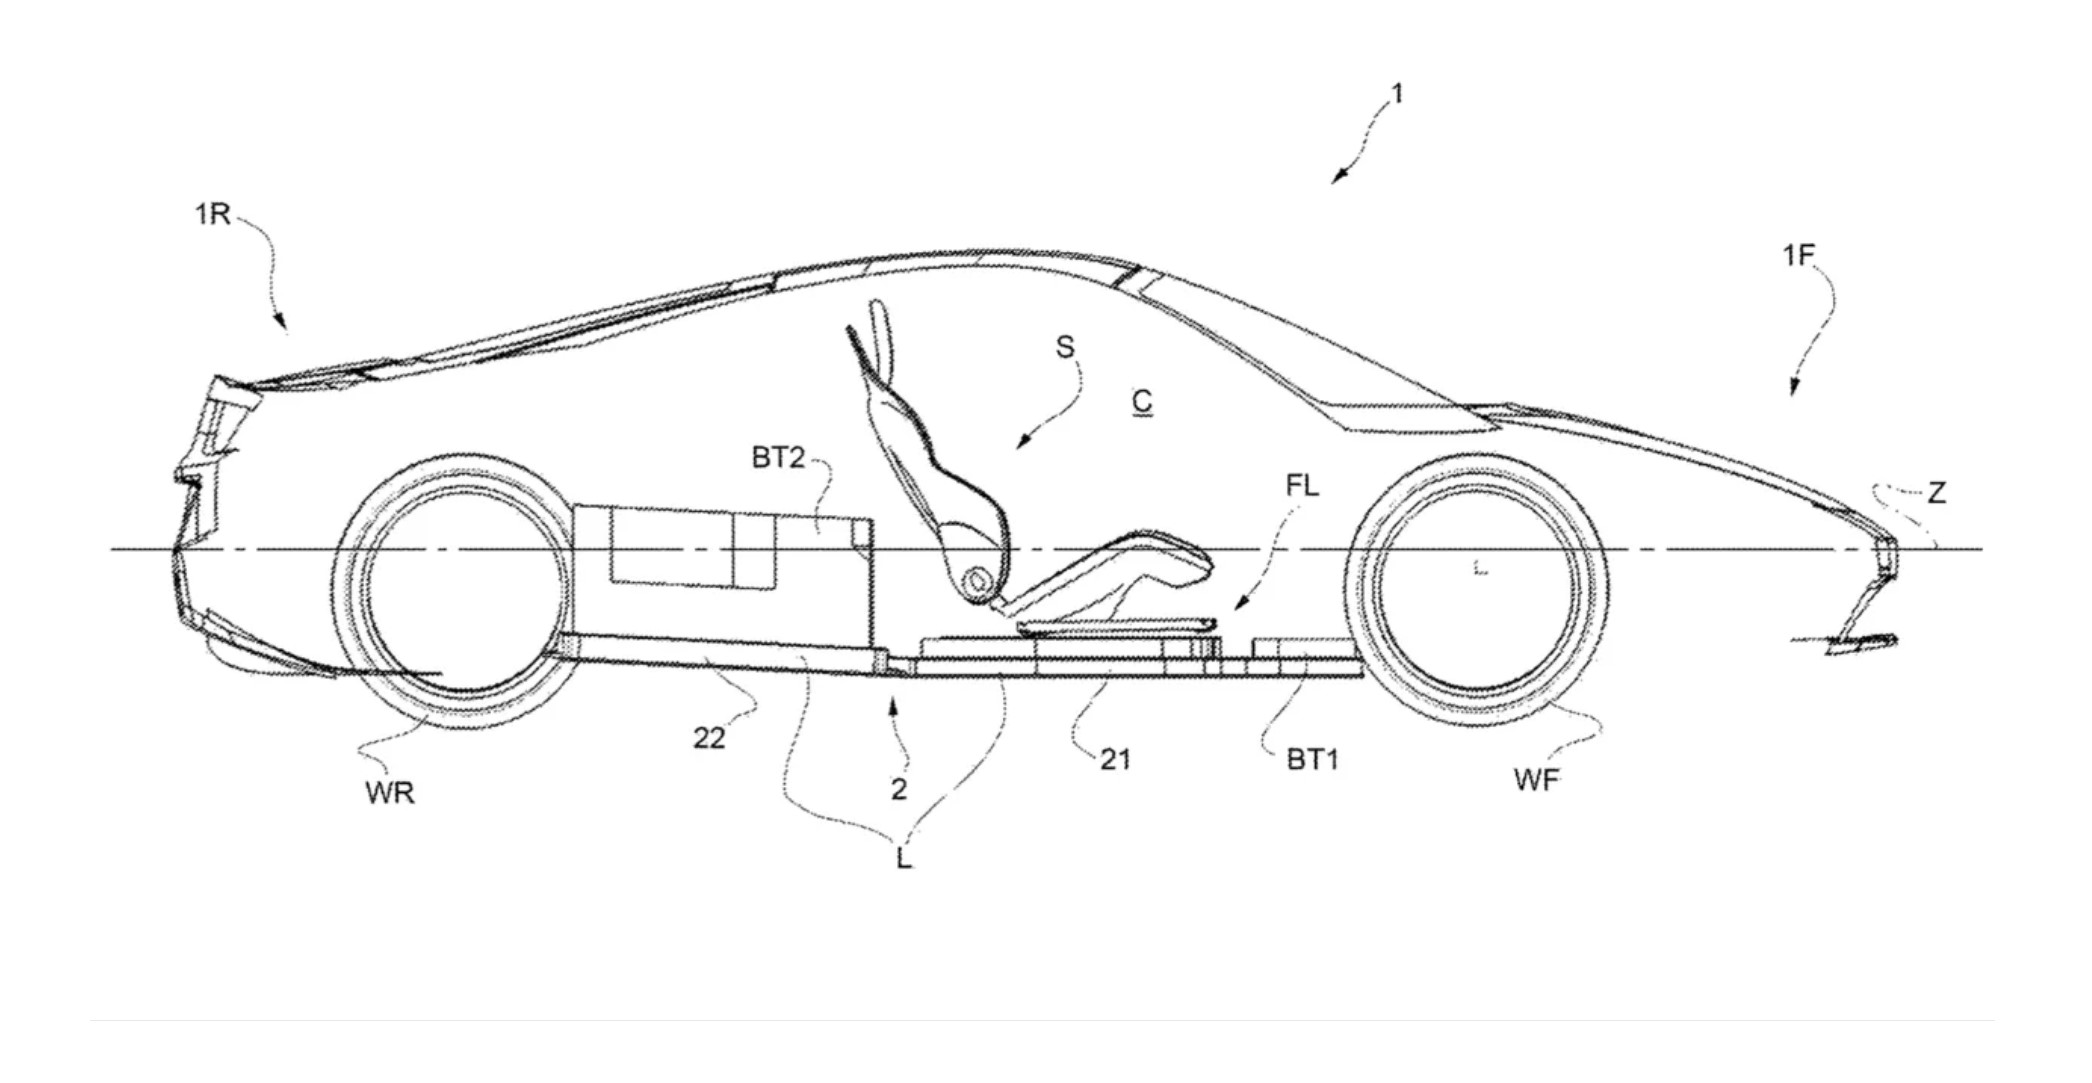 Ferrari electric patent drawing 1